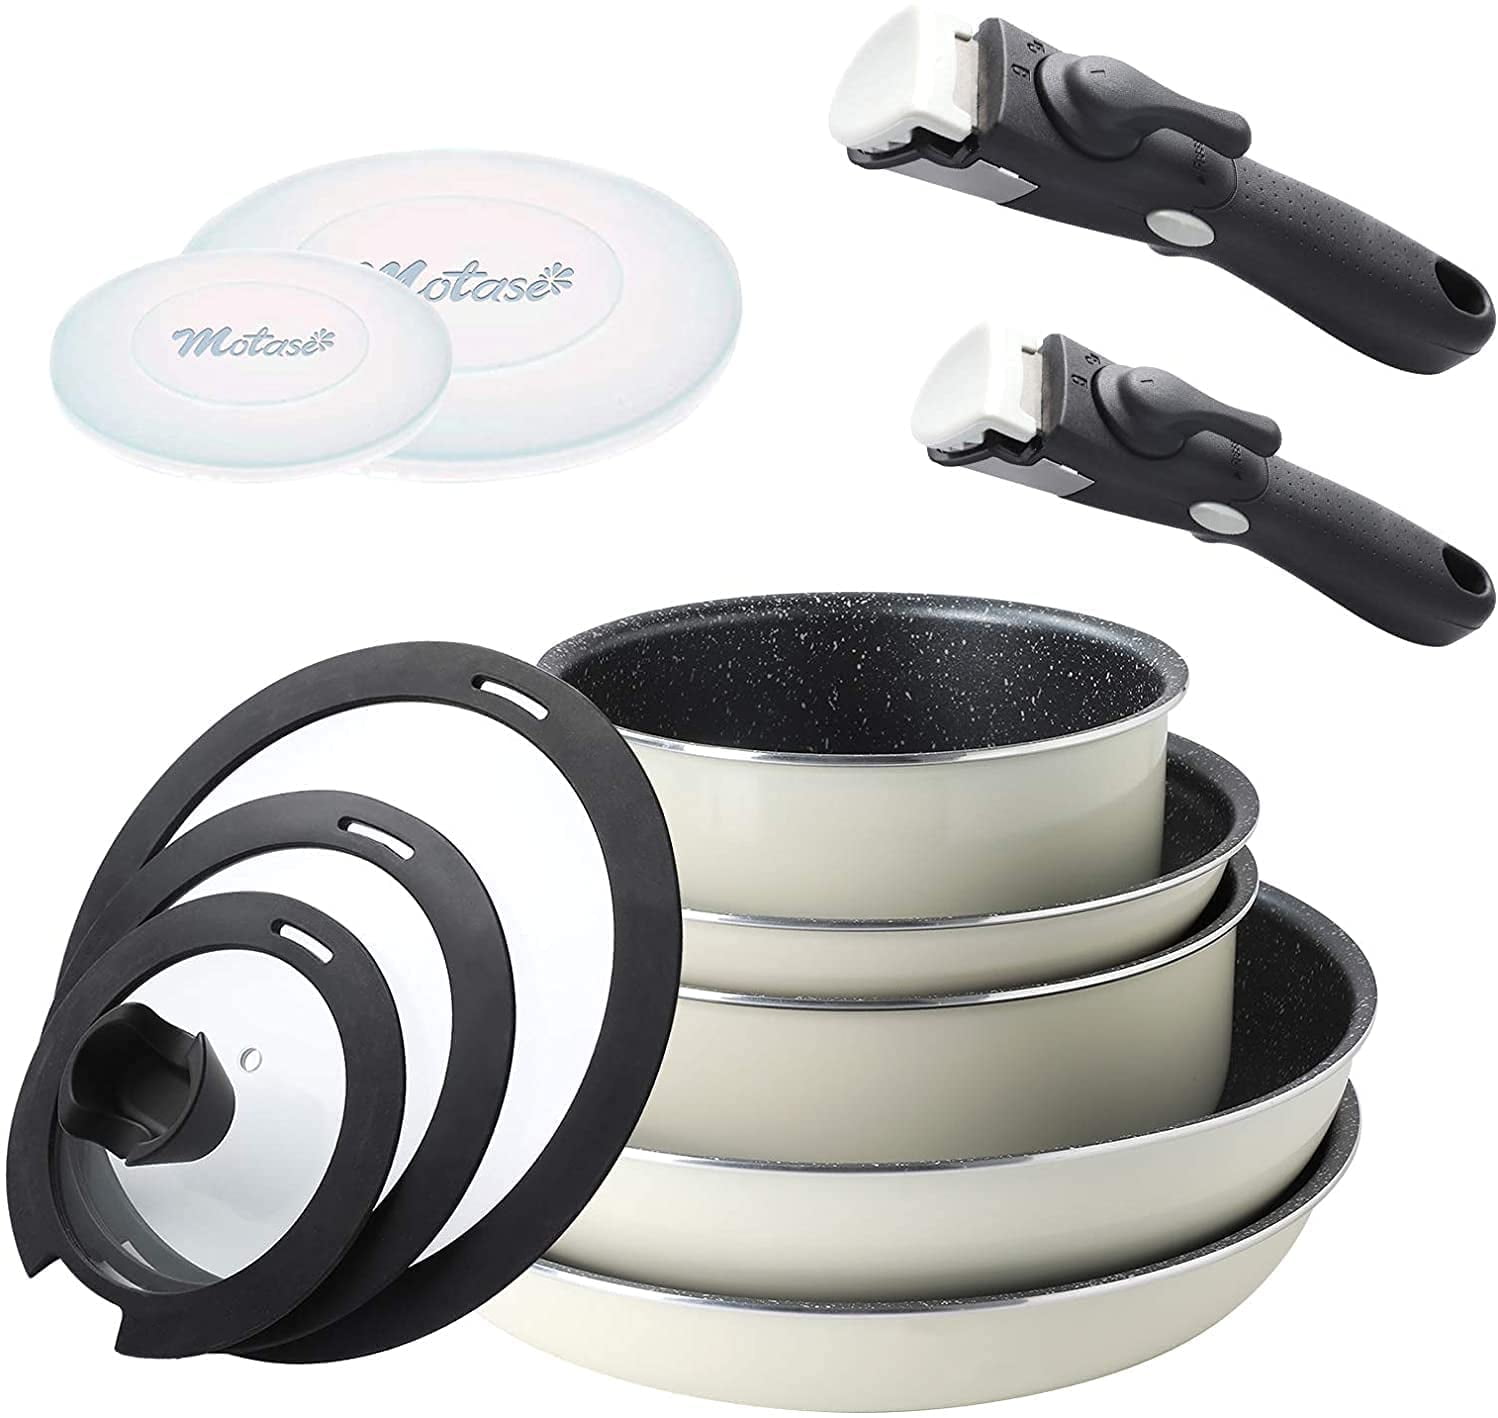 Abizoe 12 Piece Non-Stick Cookware Set Non-Stick Pans and Pots with Removable Handles, Space Efficient Excellent for RVs and Com